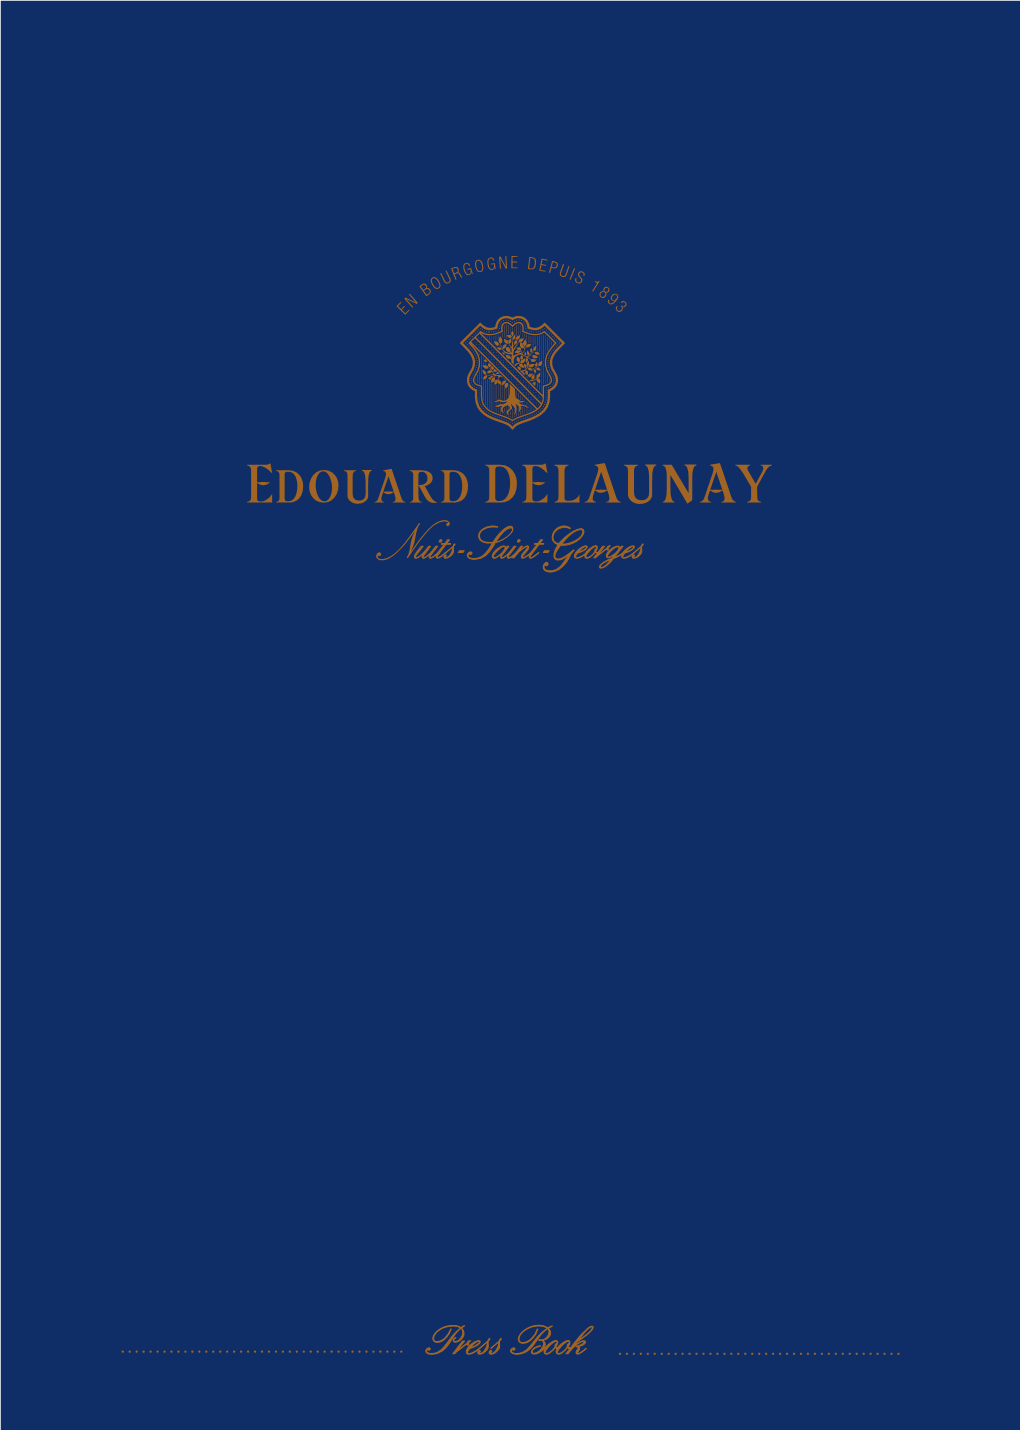 Press Book Edouard Delaunay